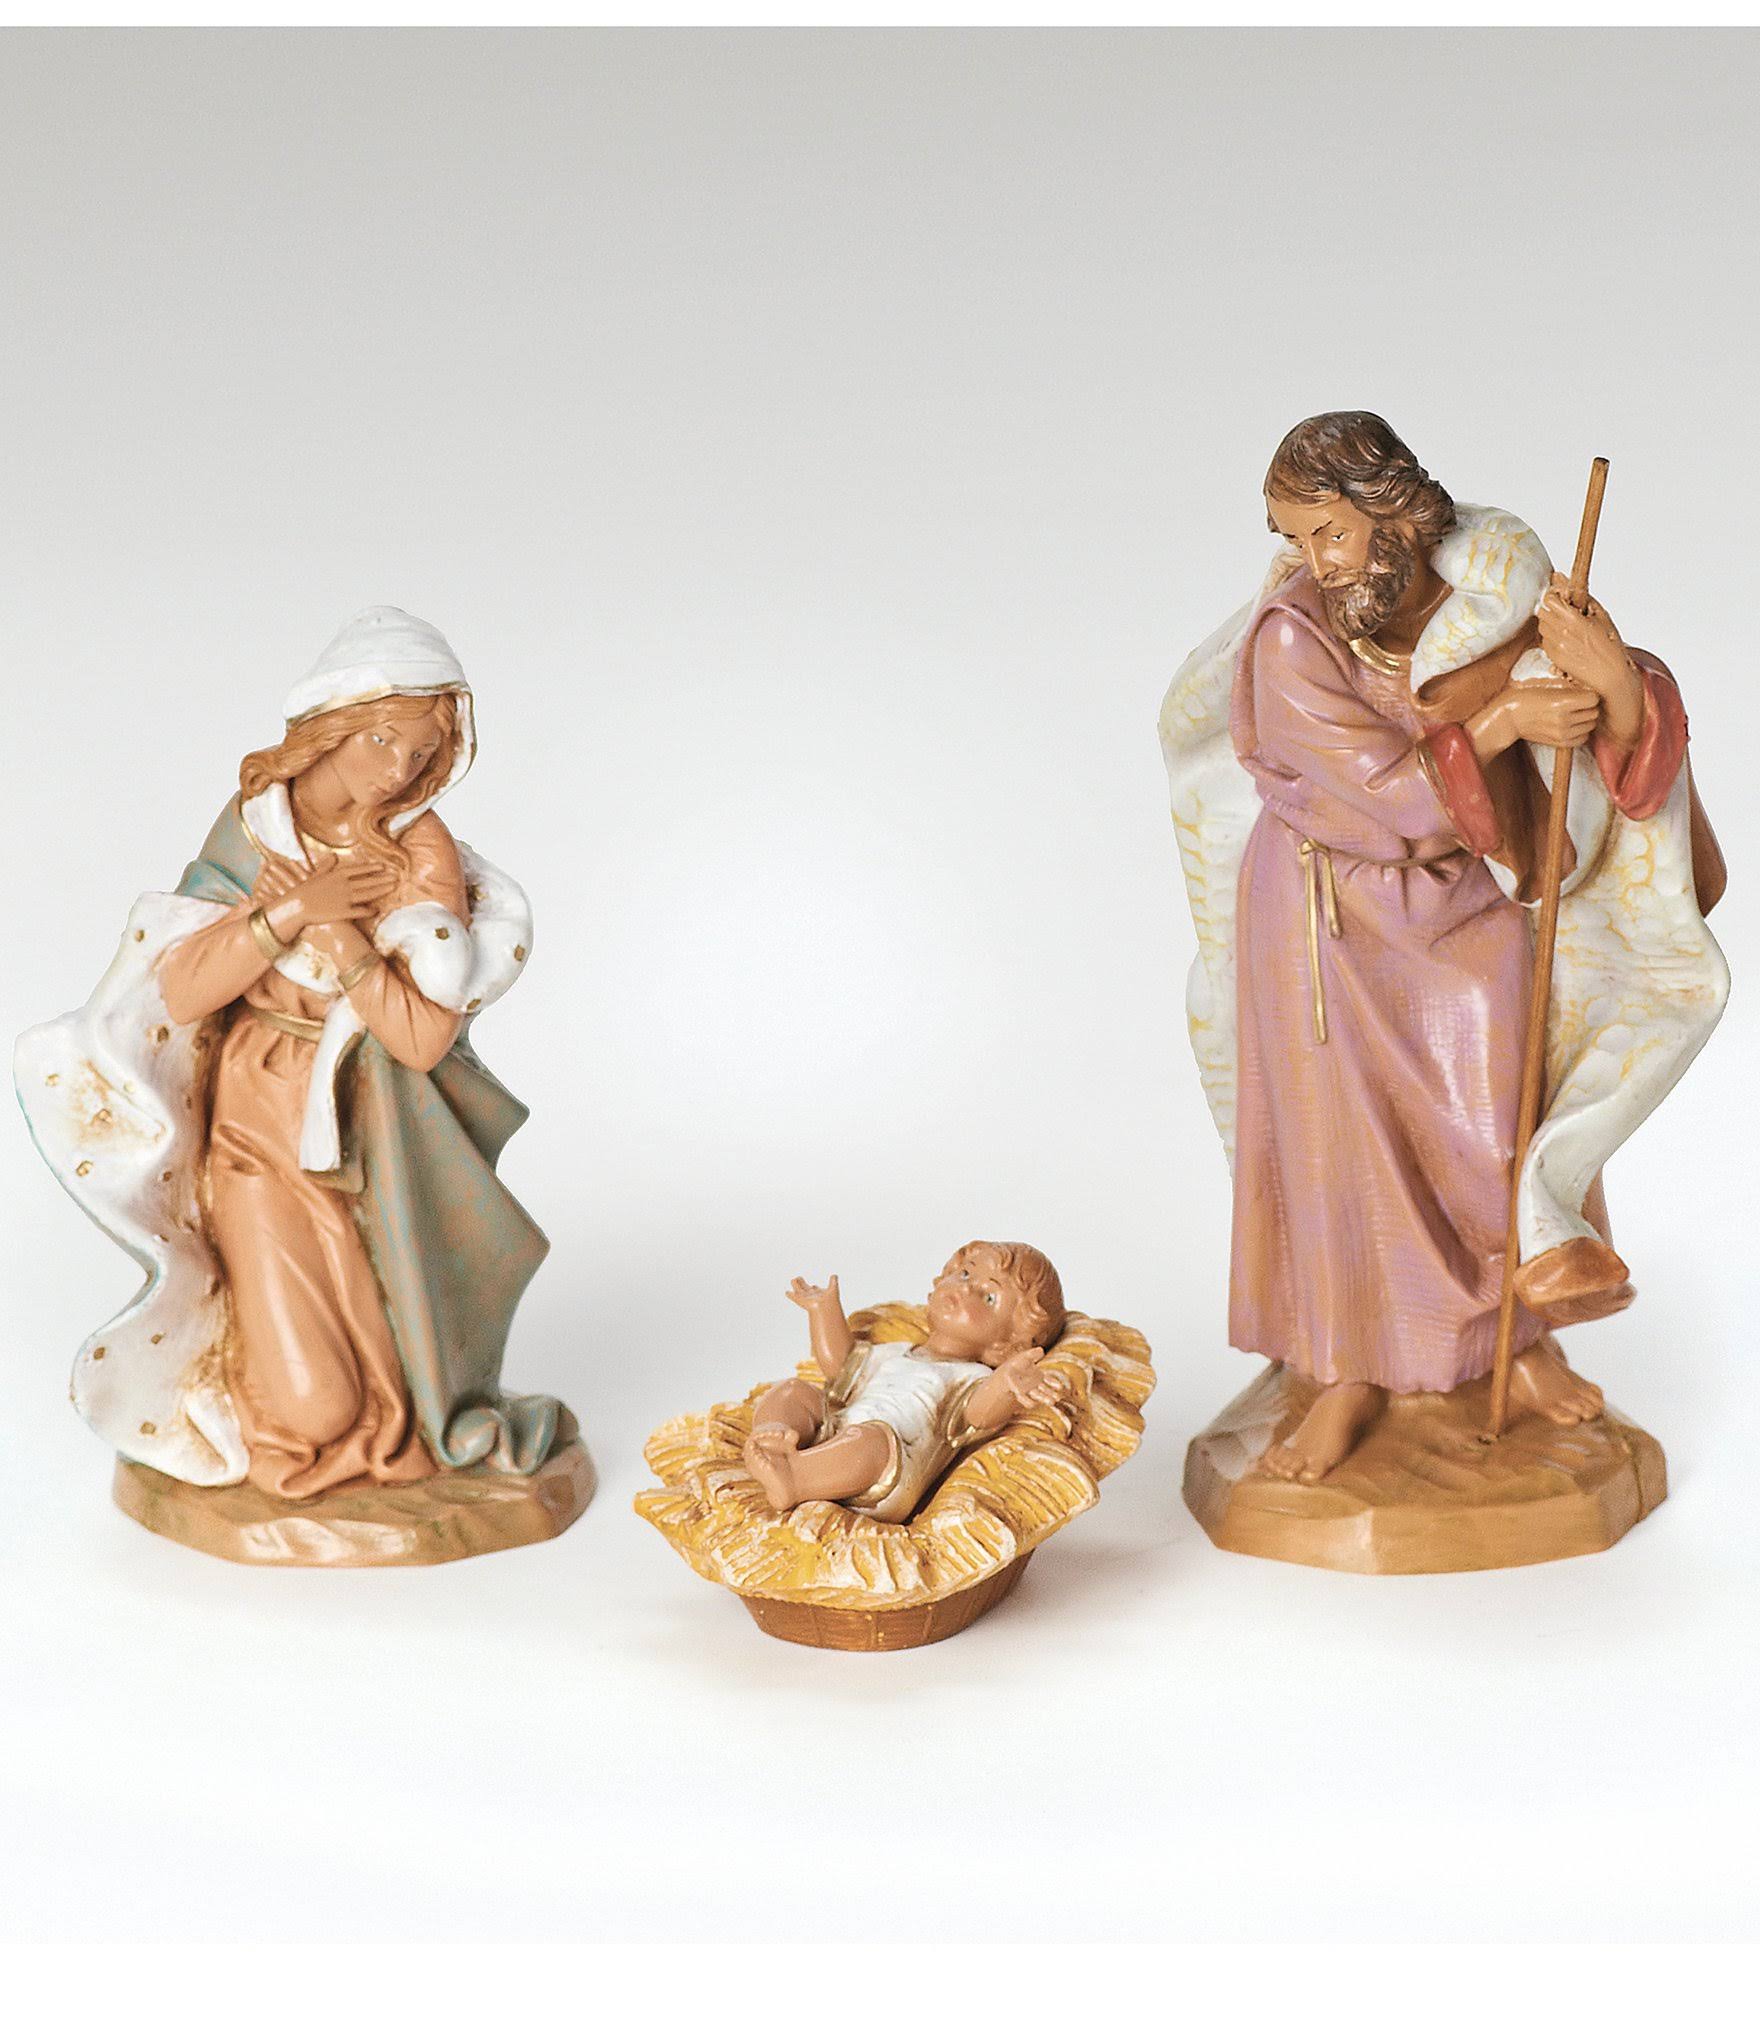 Fontanini Holy Family Italian Nativity Village Figurine Set - 3pc, 7.5"